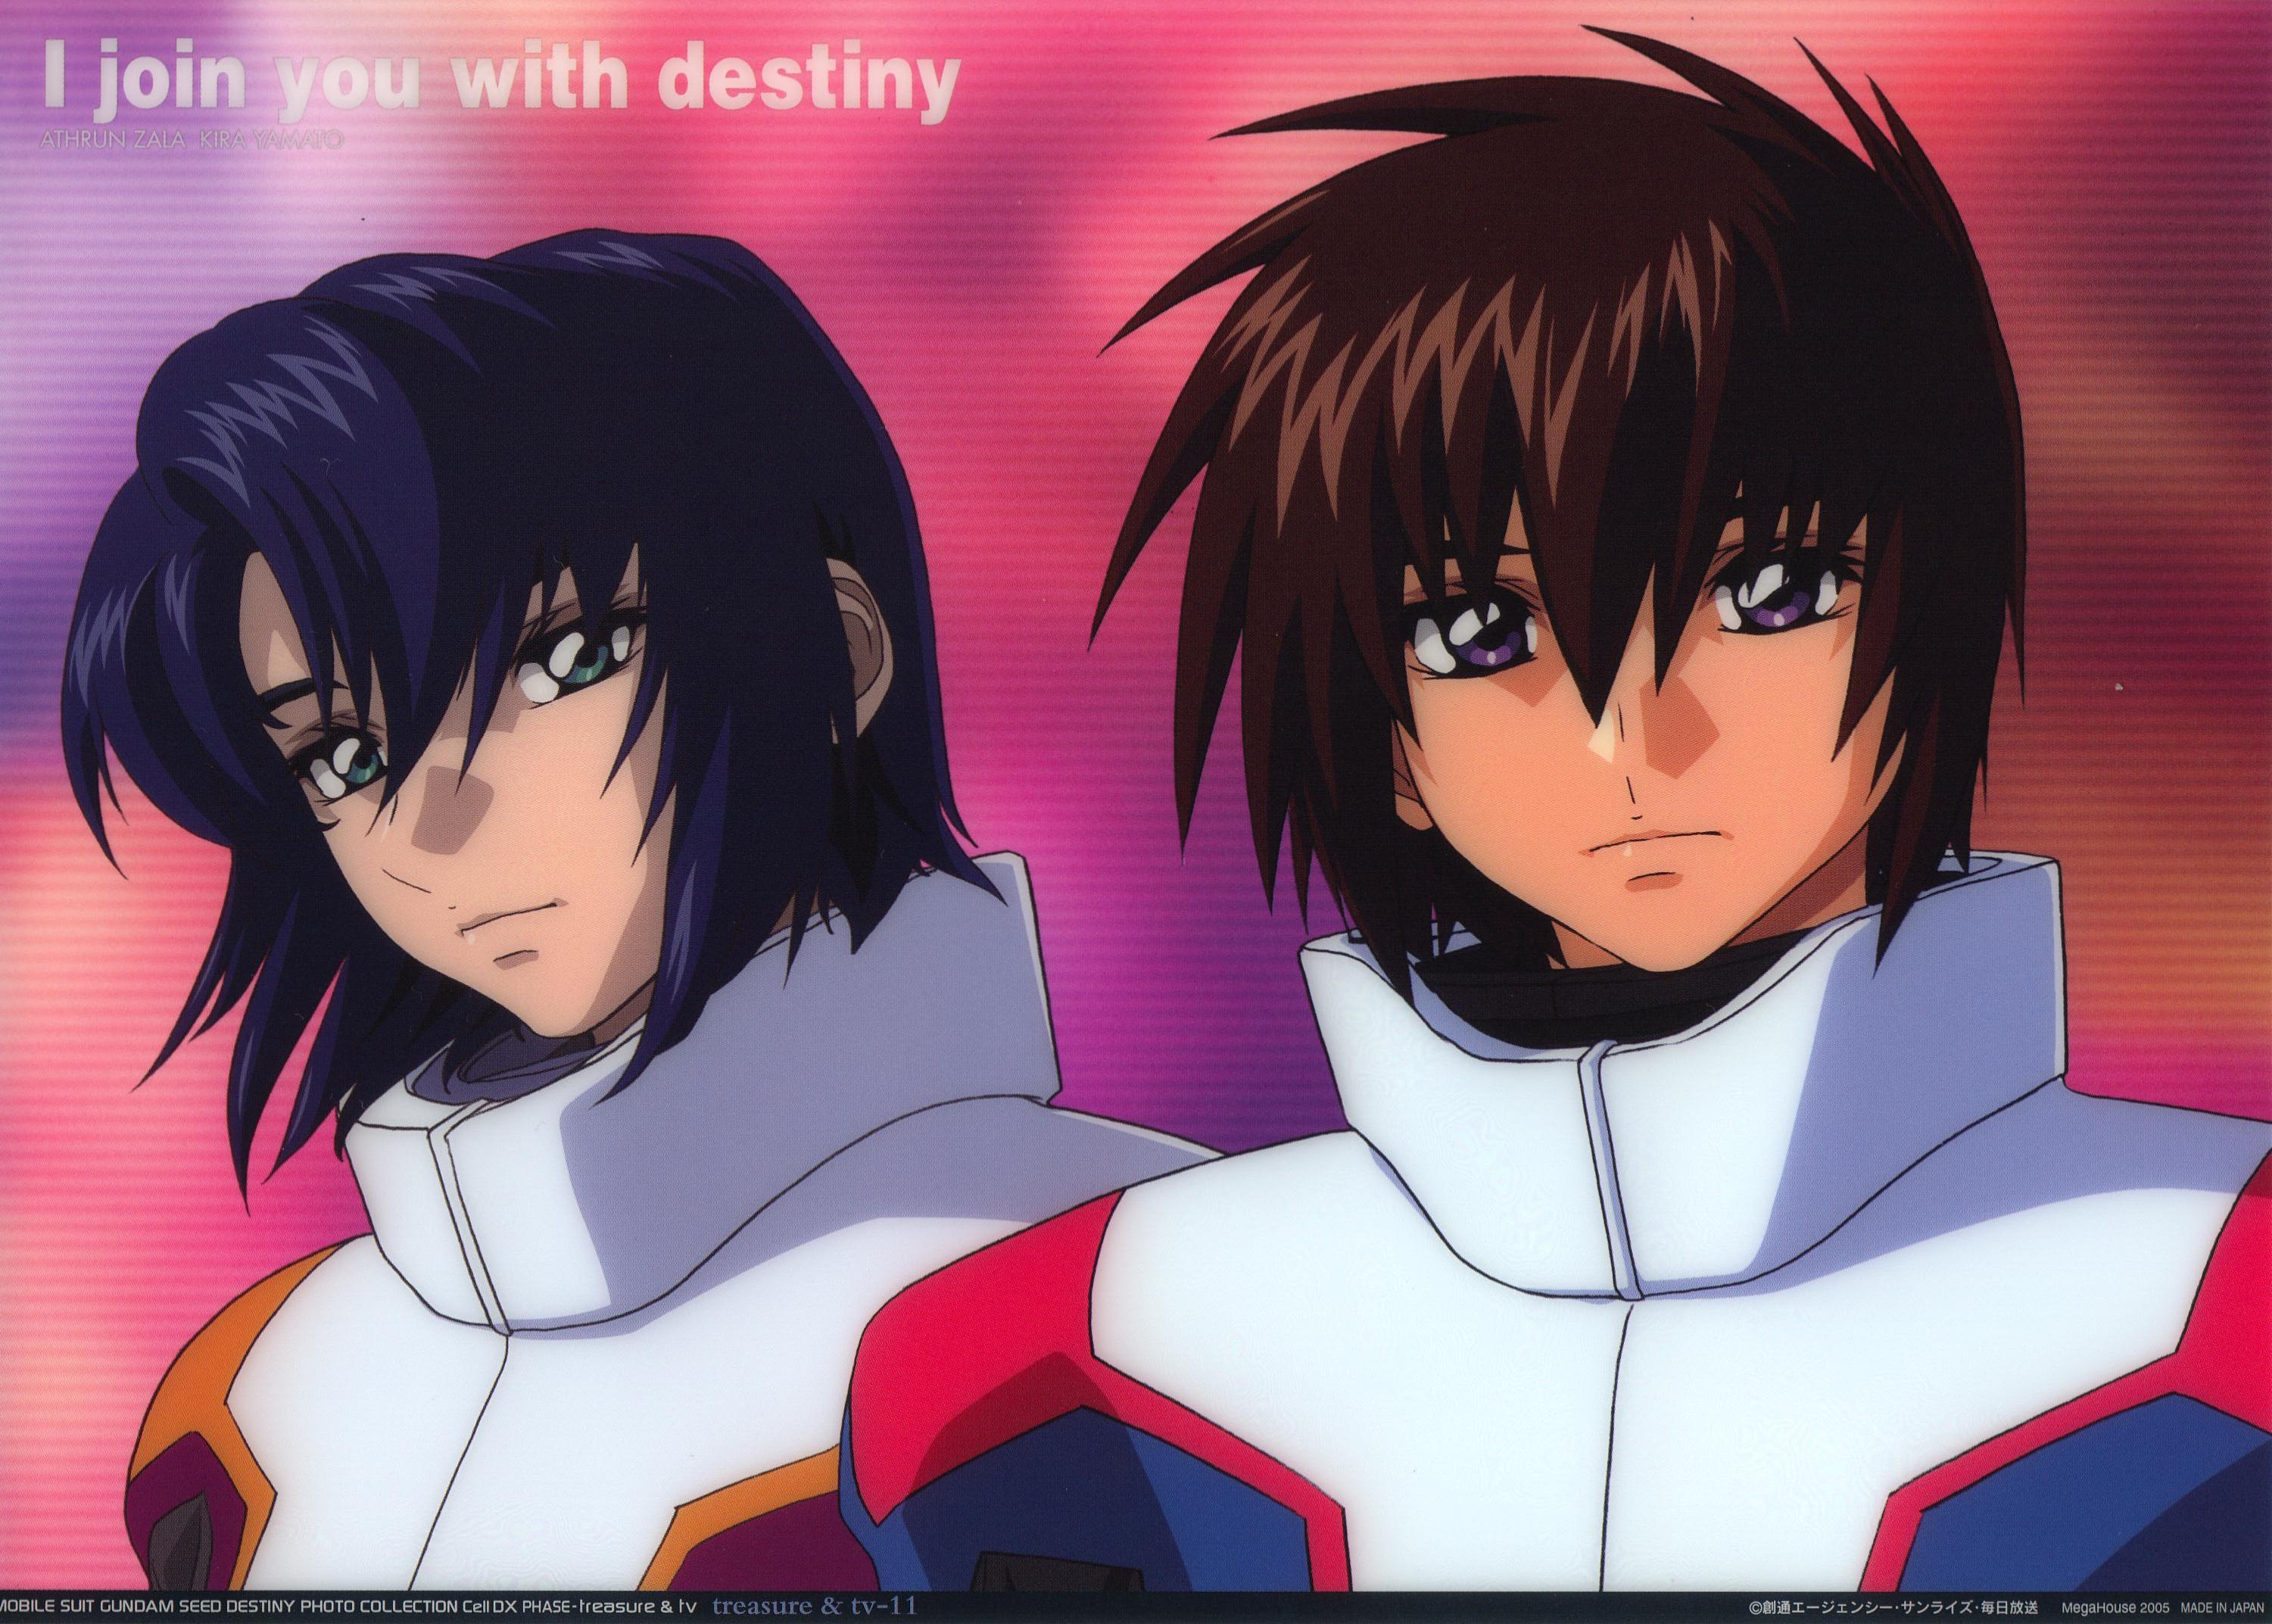 Anime Mobile Suit Gundam Seed Destiny HD Wallpaper | Background Image